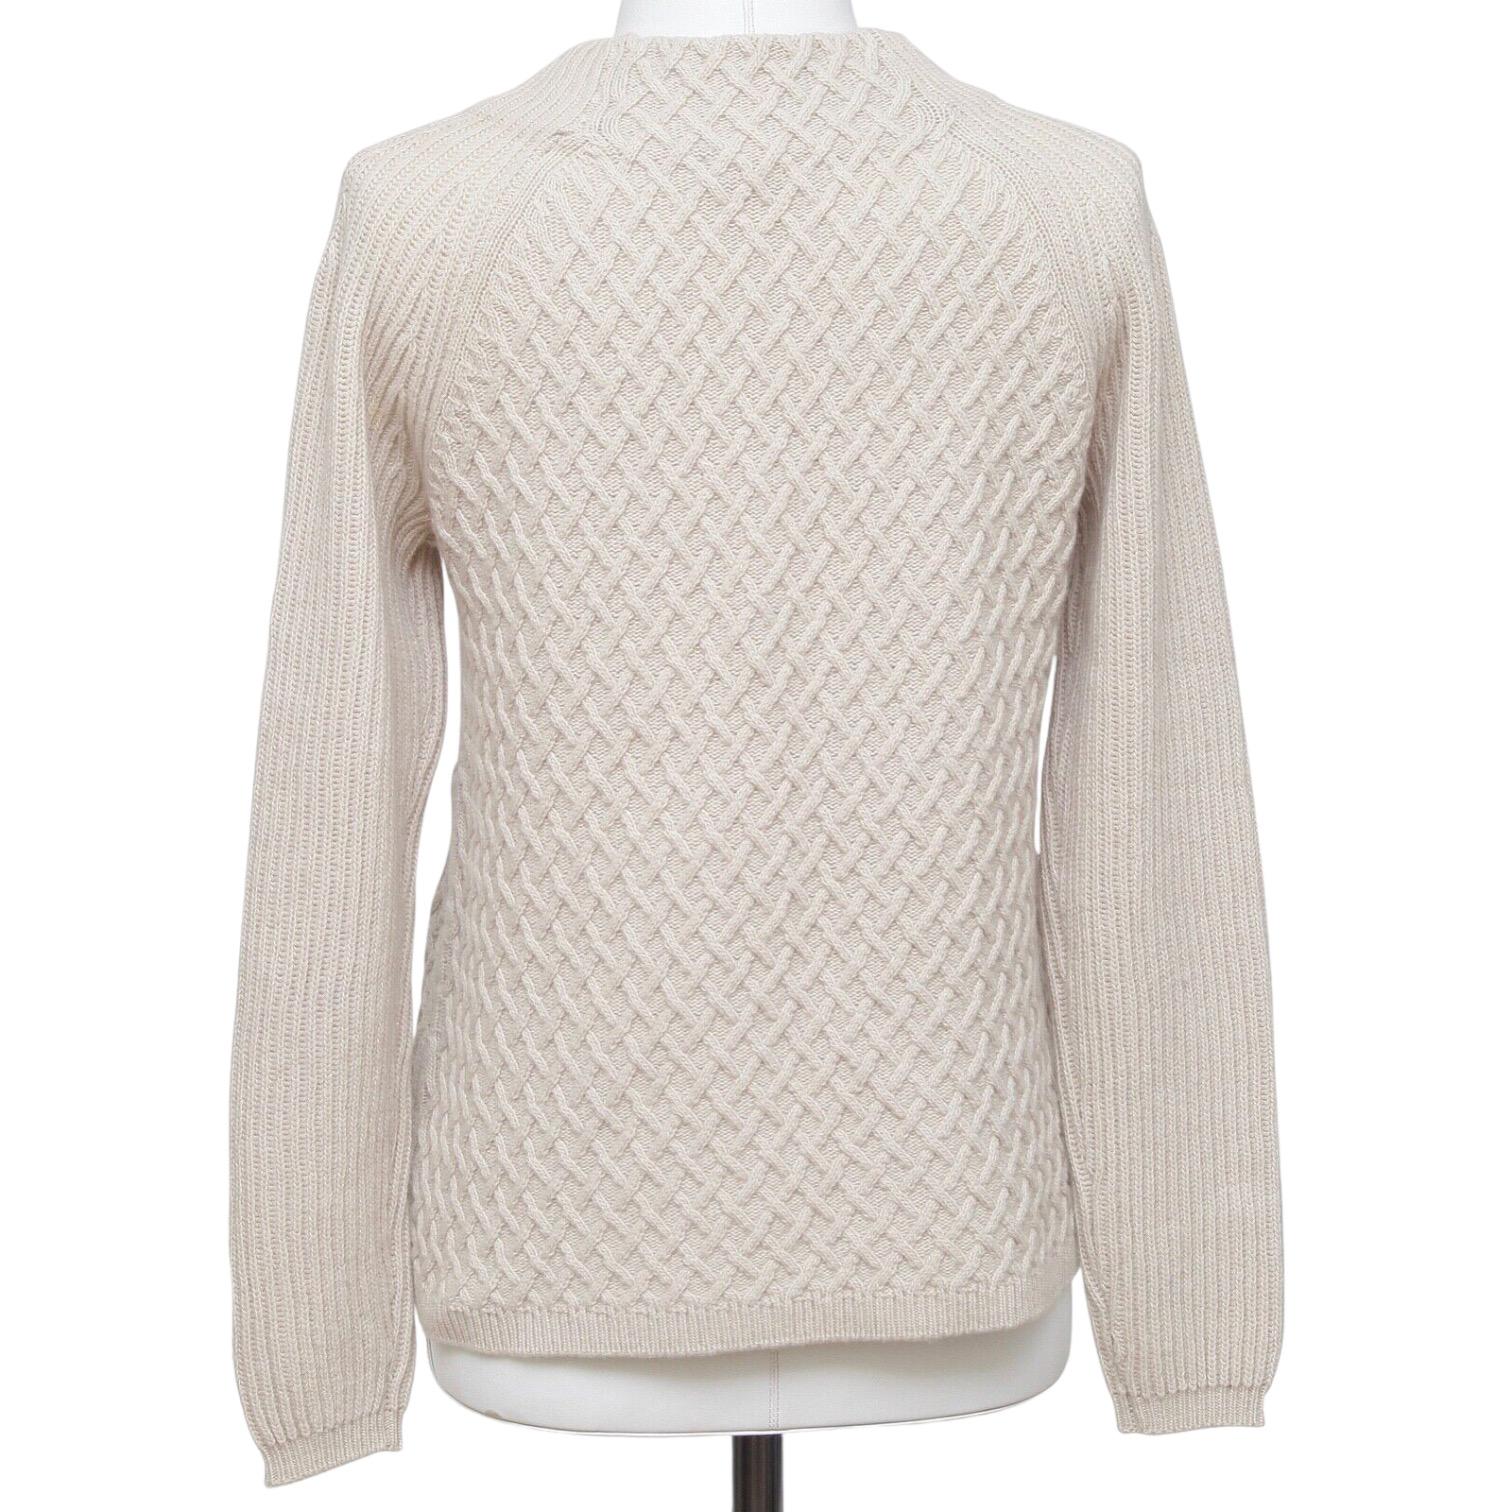 MAX MARA Knit Sweater Beige Long Sleeve Moc Turtleneck Pullover Sz S For Sale 2